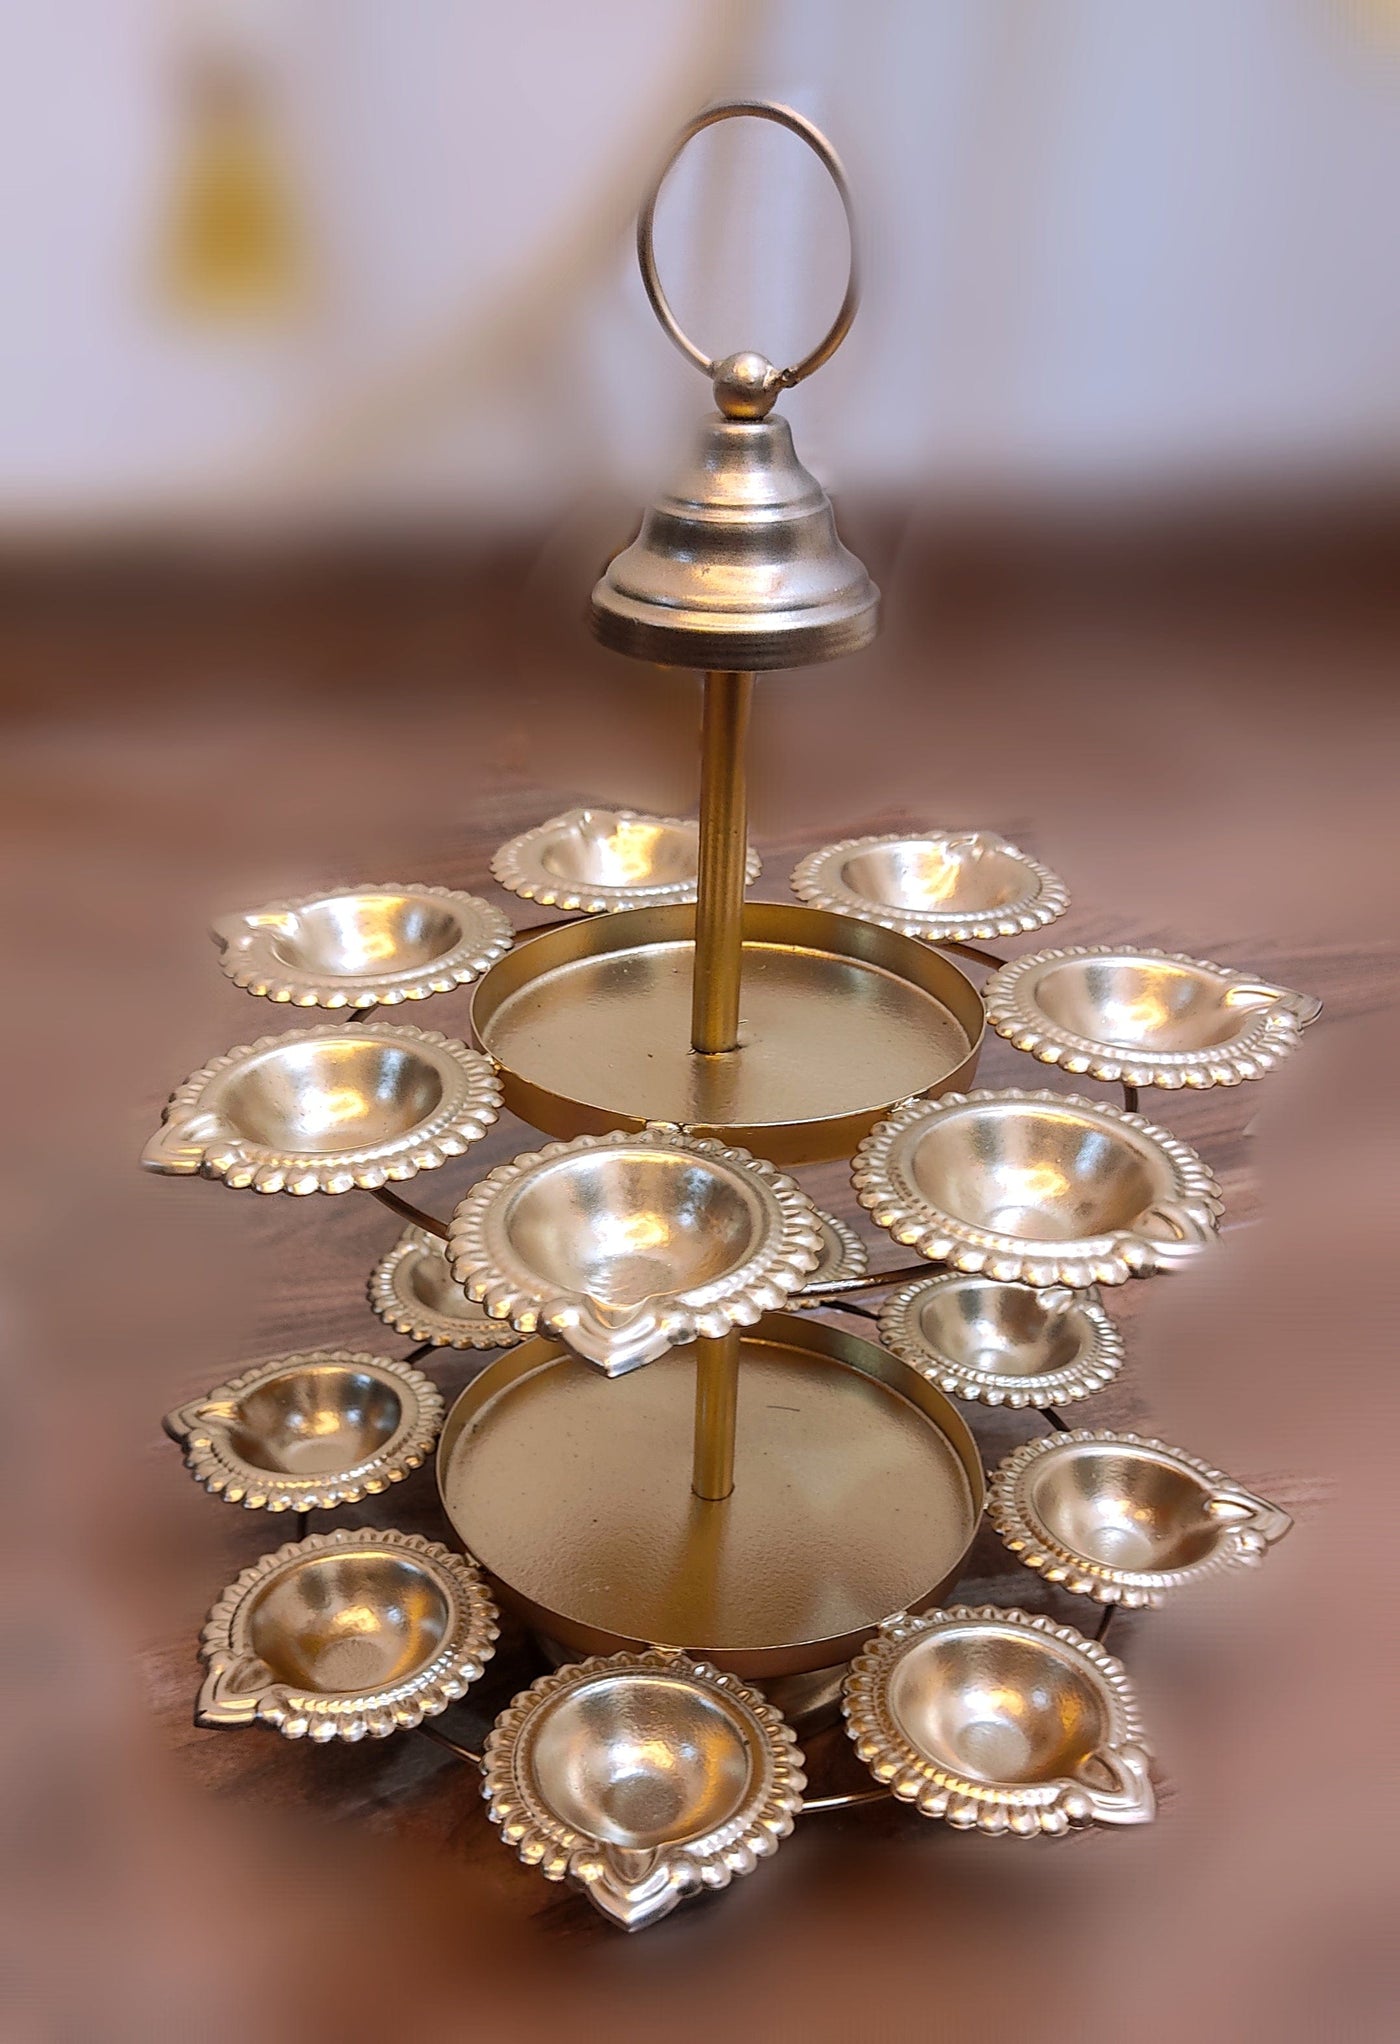 LAMANSH diya stand LAMANSH Decorative Metal Diya Stand for Festival Decor 🔥 in Diwali, Navratri & Ganesh Chaturthi